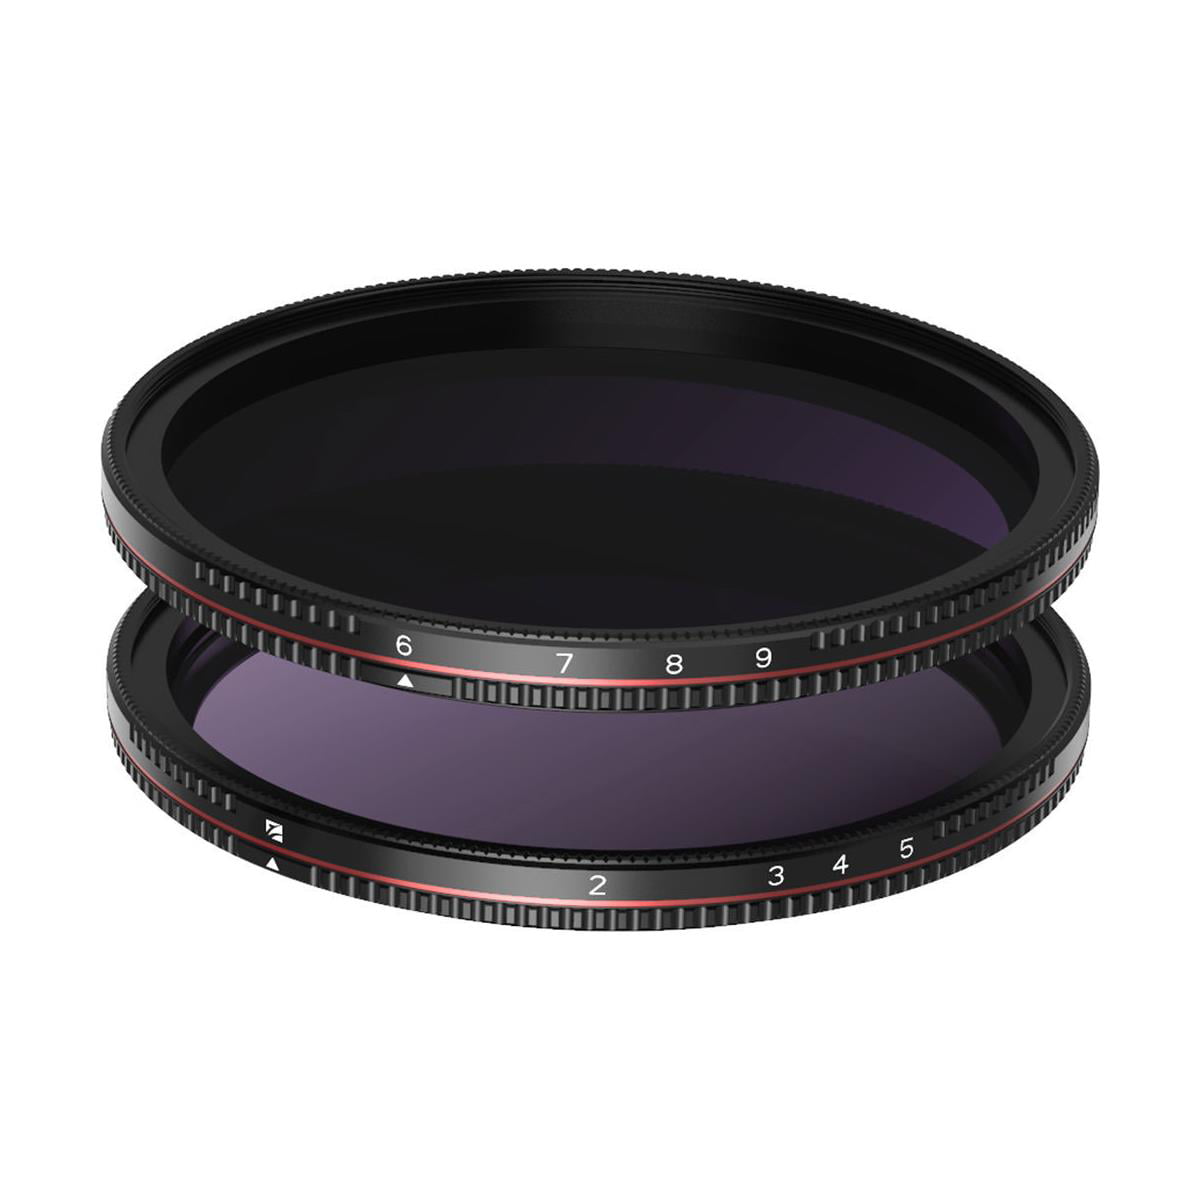 55mm Variable Neutral Density Filter for Pentax 55mm f/2.8 Standard Lens